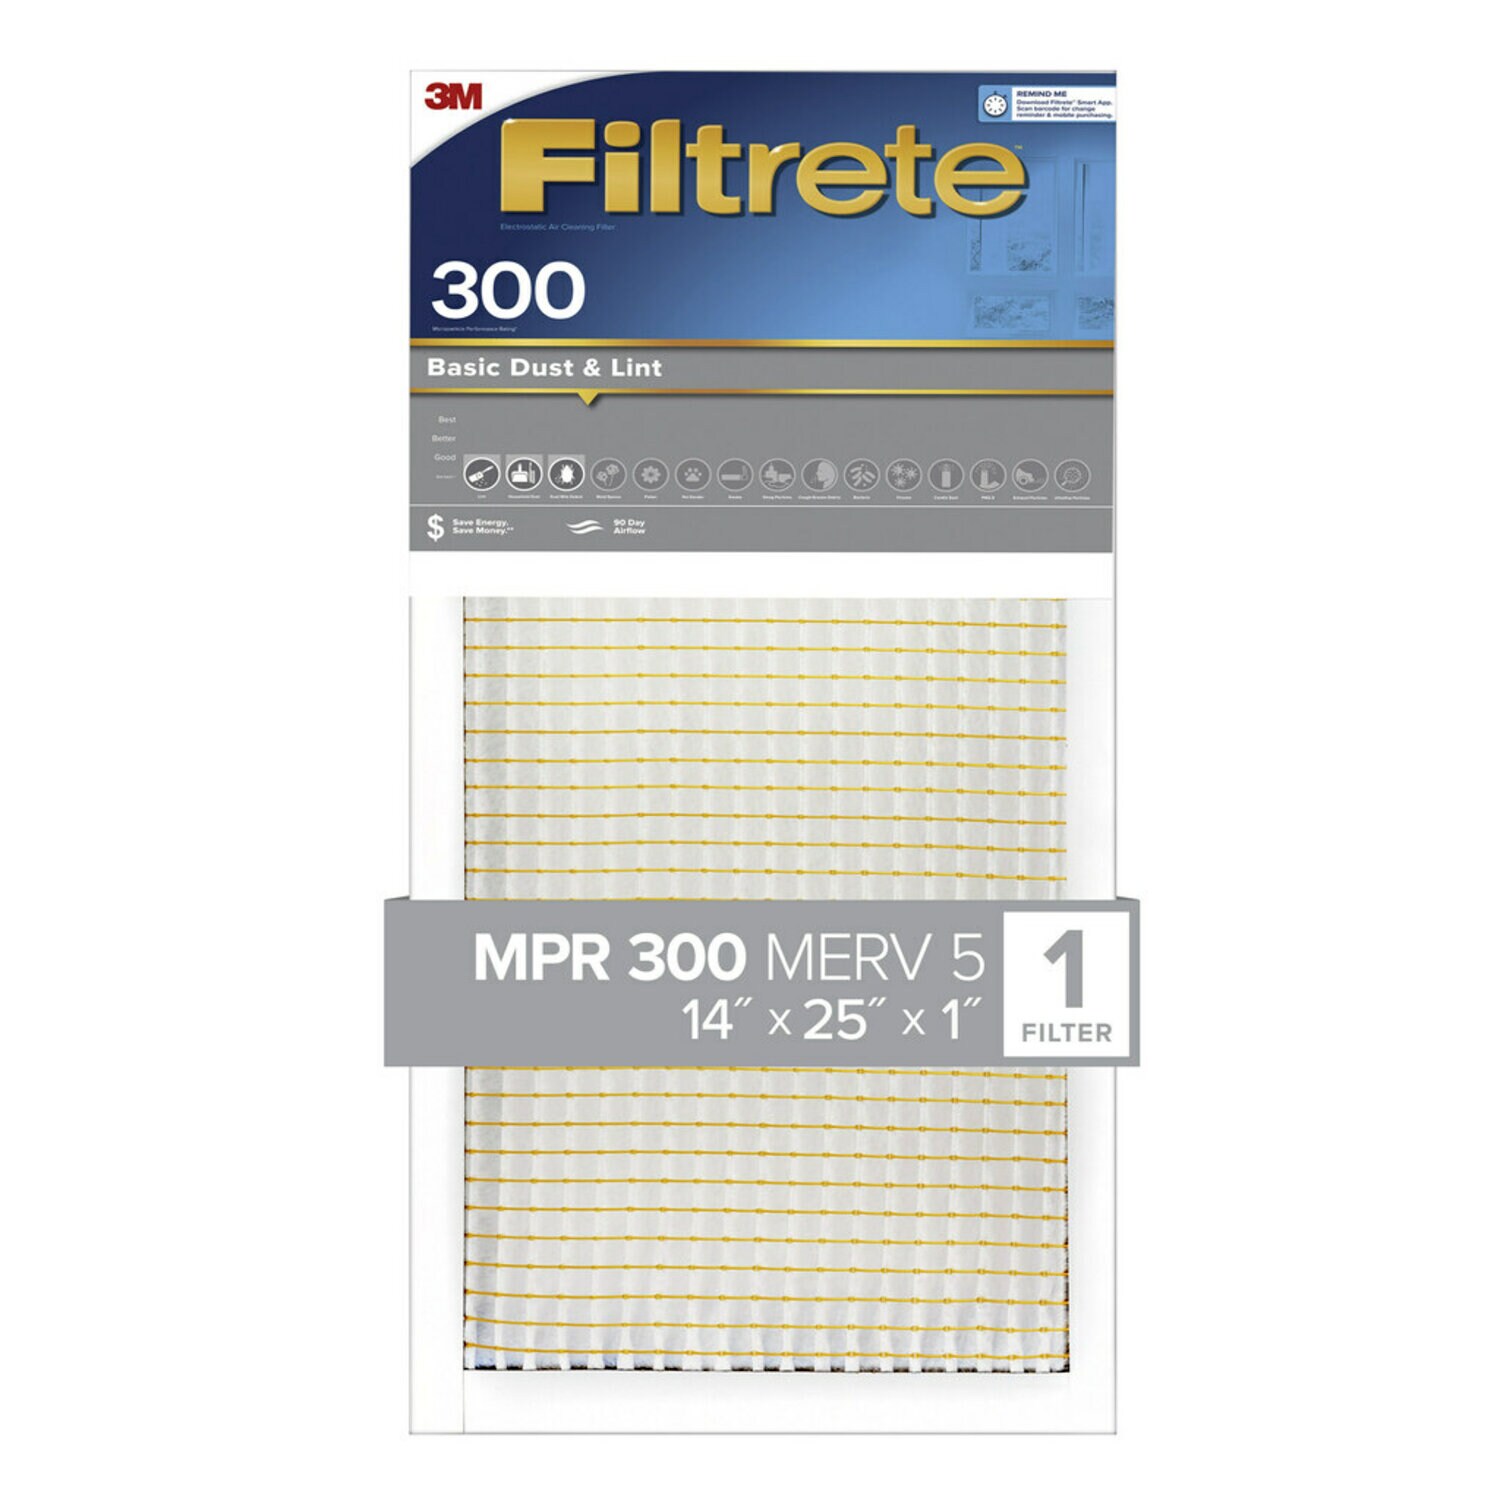 7100186900 - Filtrete Basic Dust & Lint Air Filter, 300 MPR, 304-4, 14 in x 25 in x
1 in (35.5 cm x 63.5 cm x 2.5 cm)